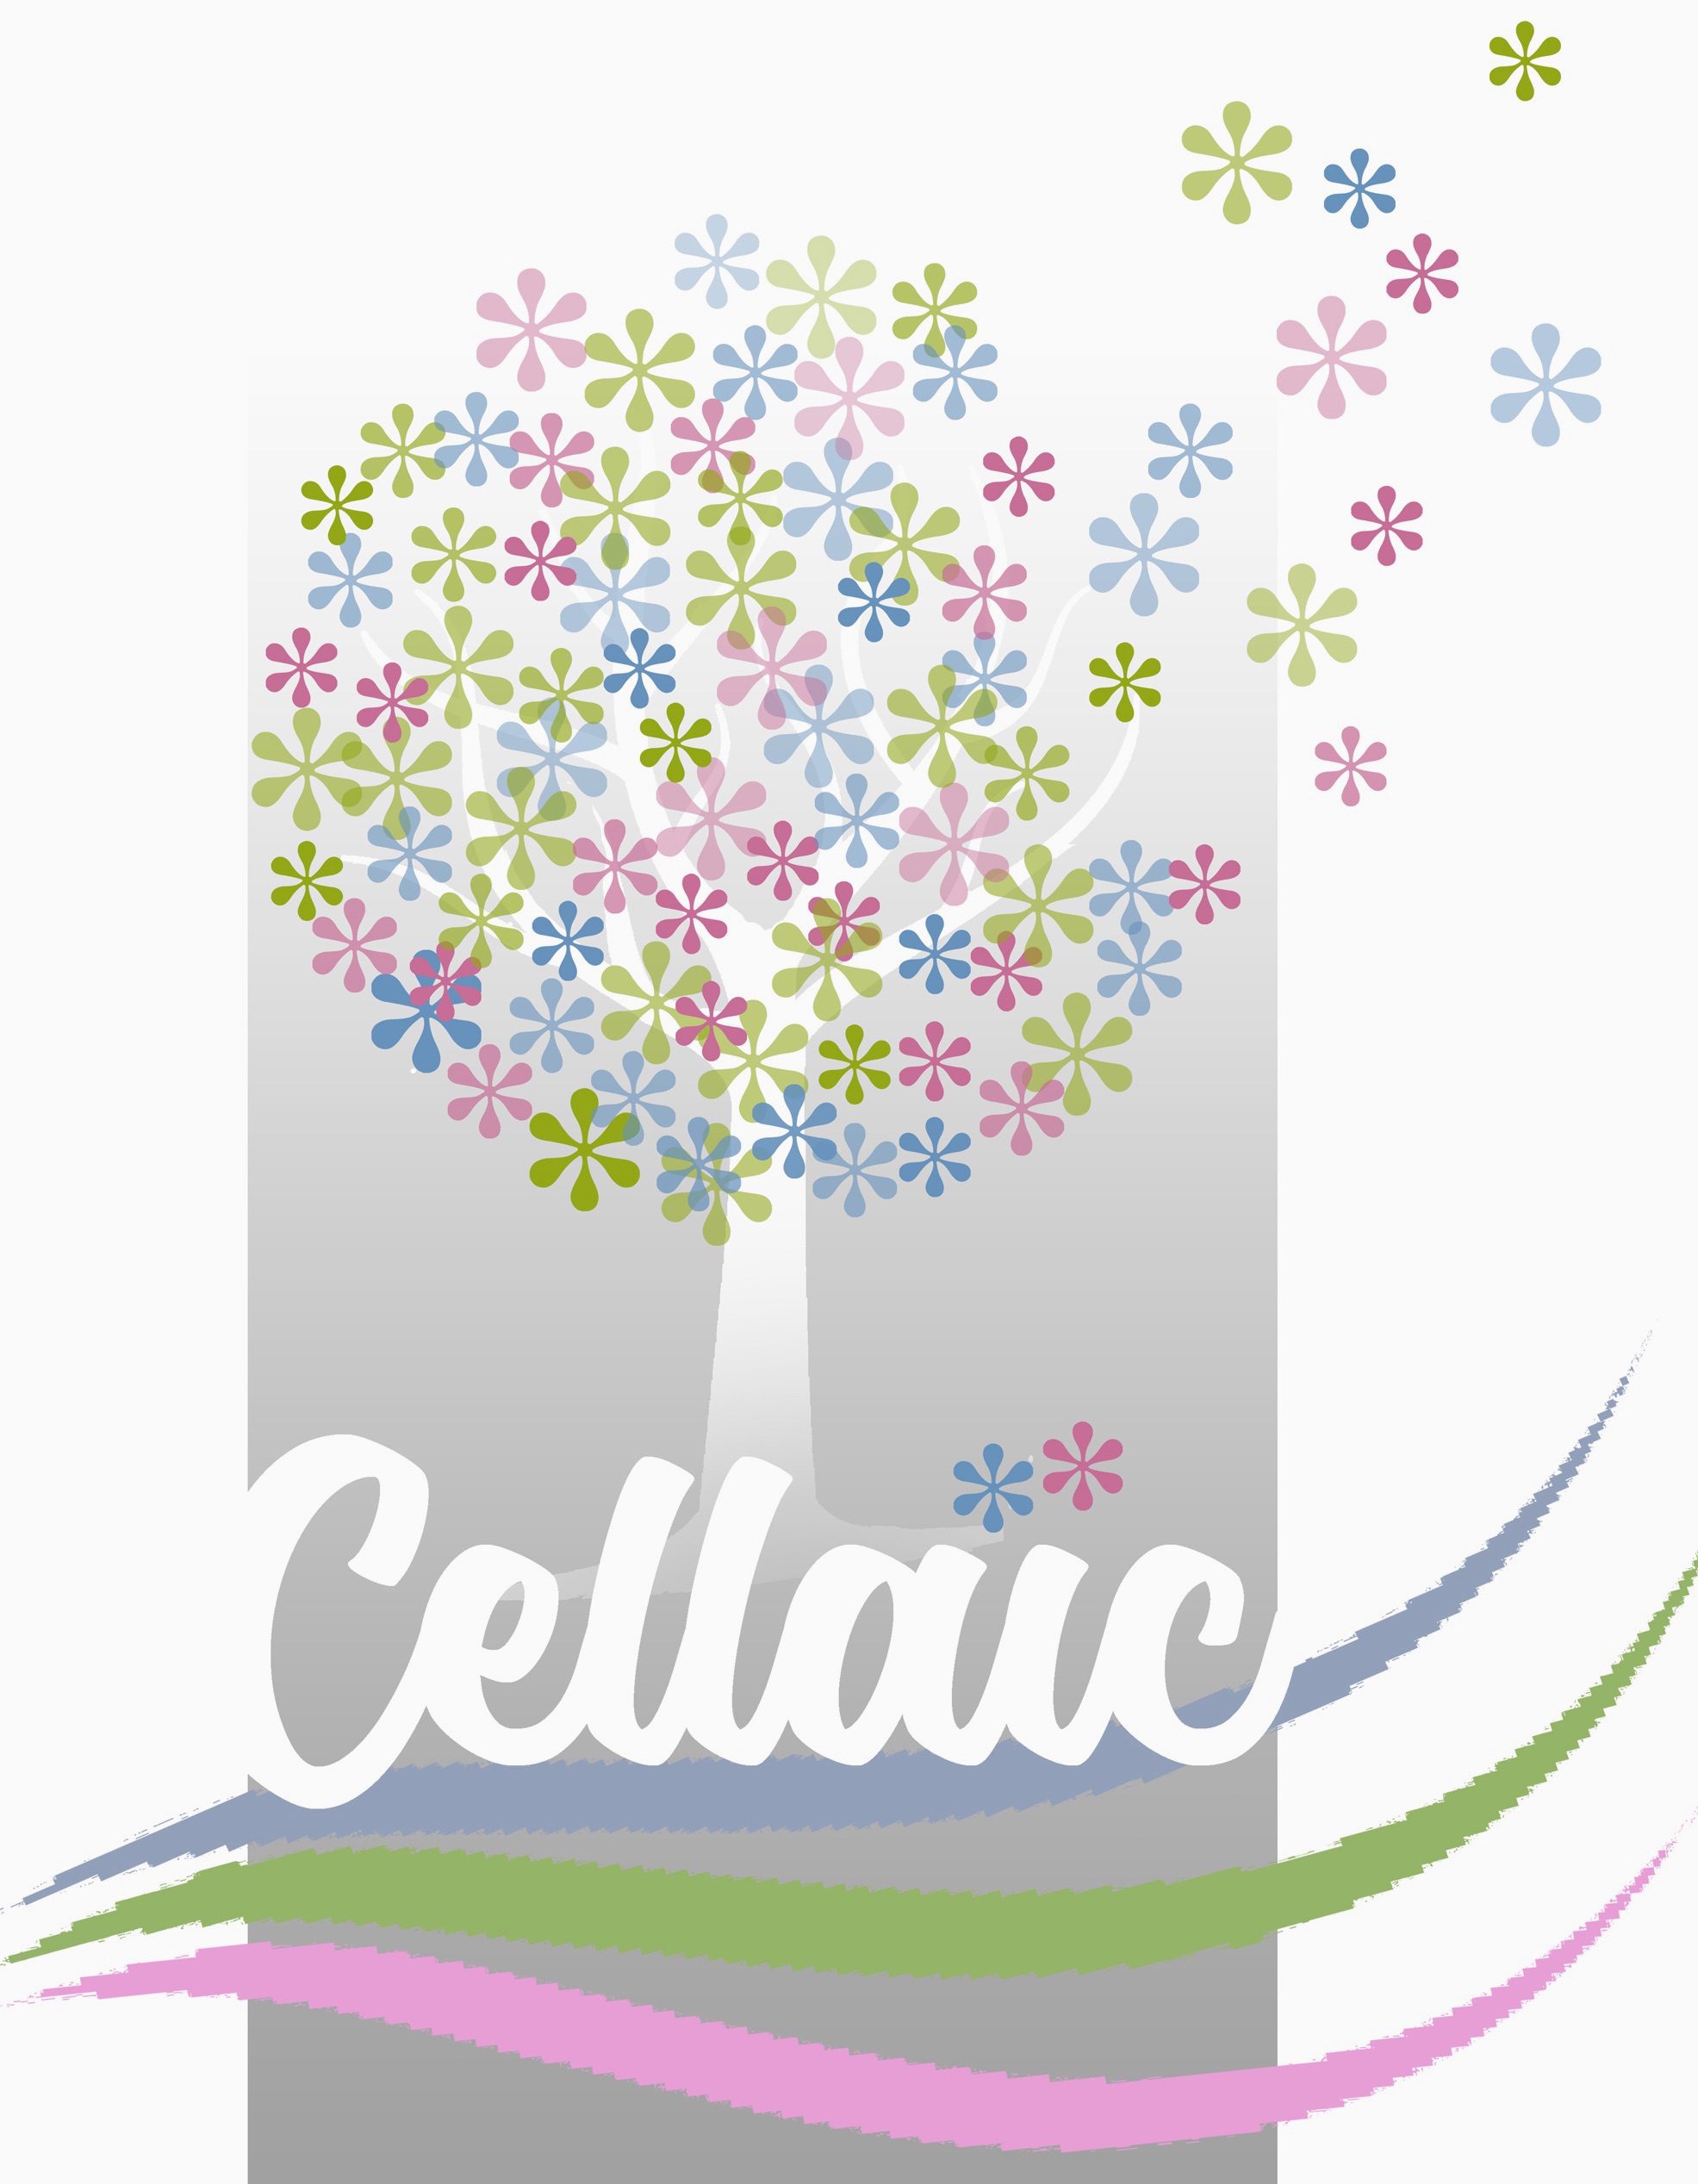 Cellaïc